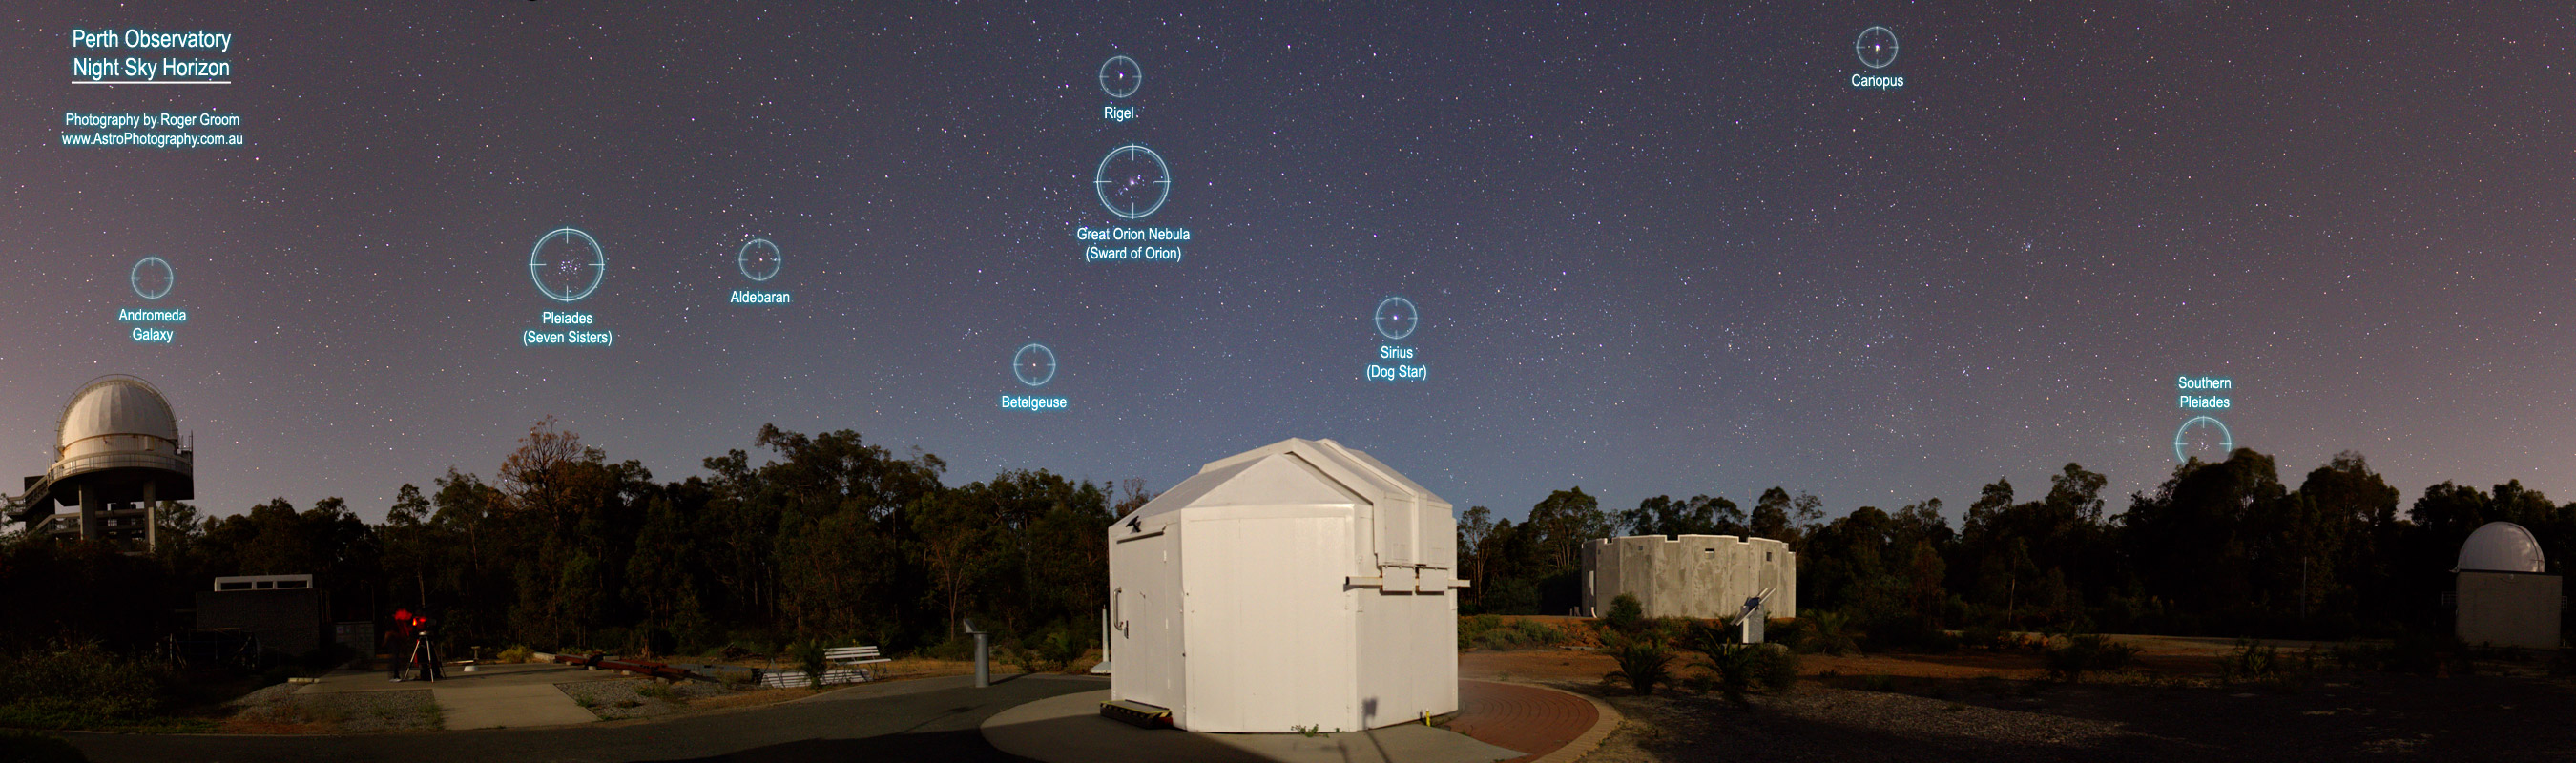 Perth Observatory Night Sky Horizon